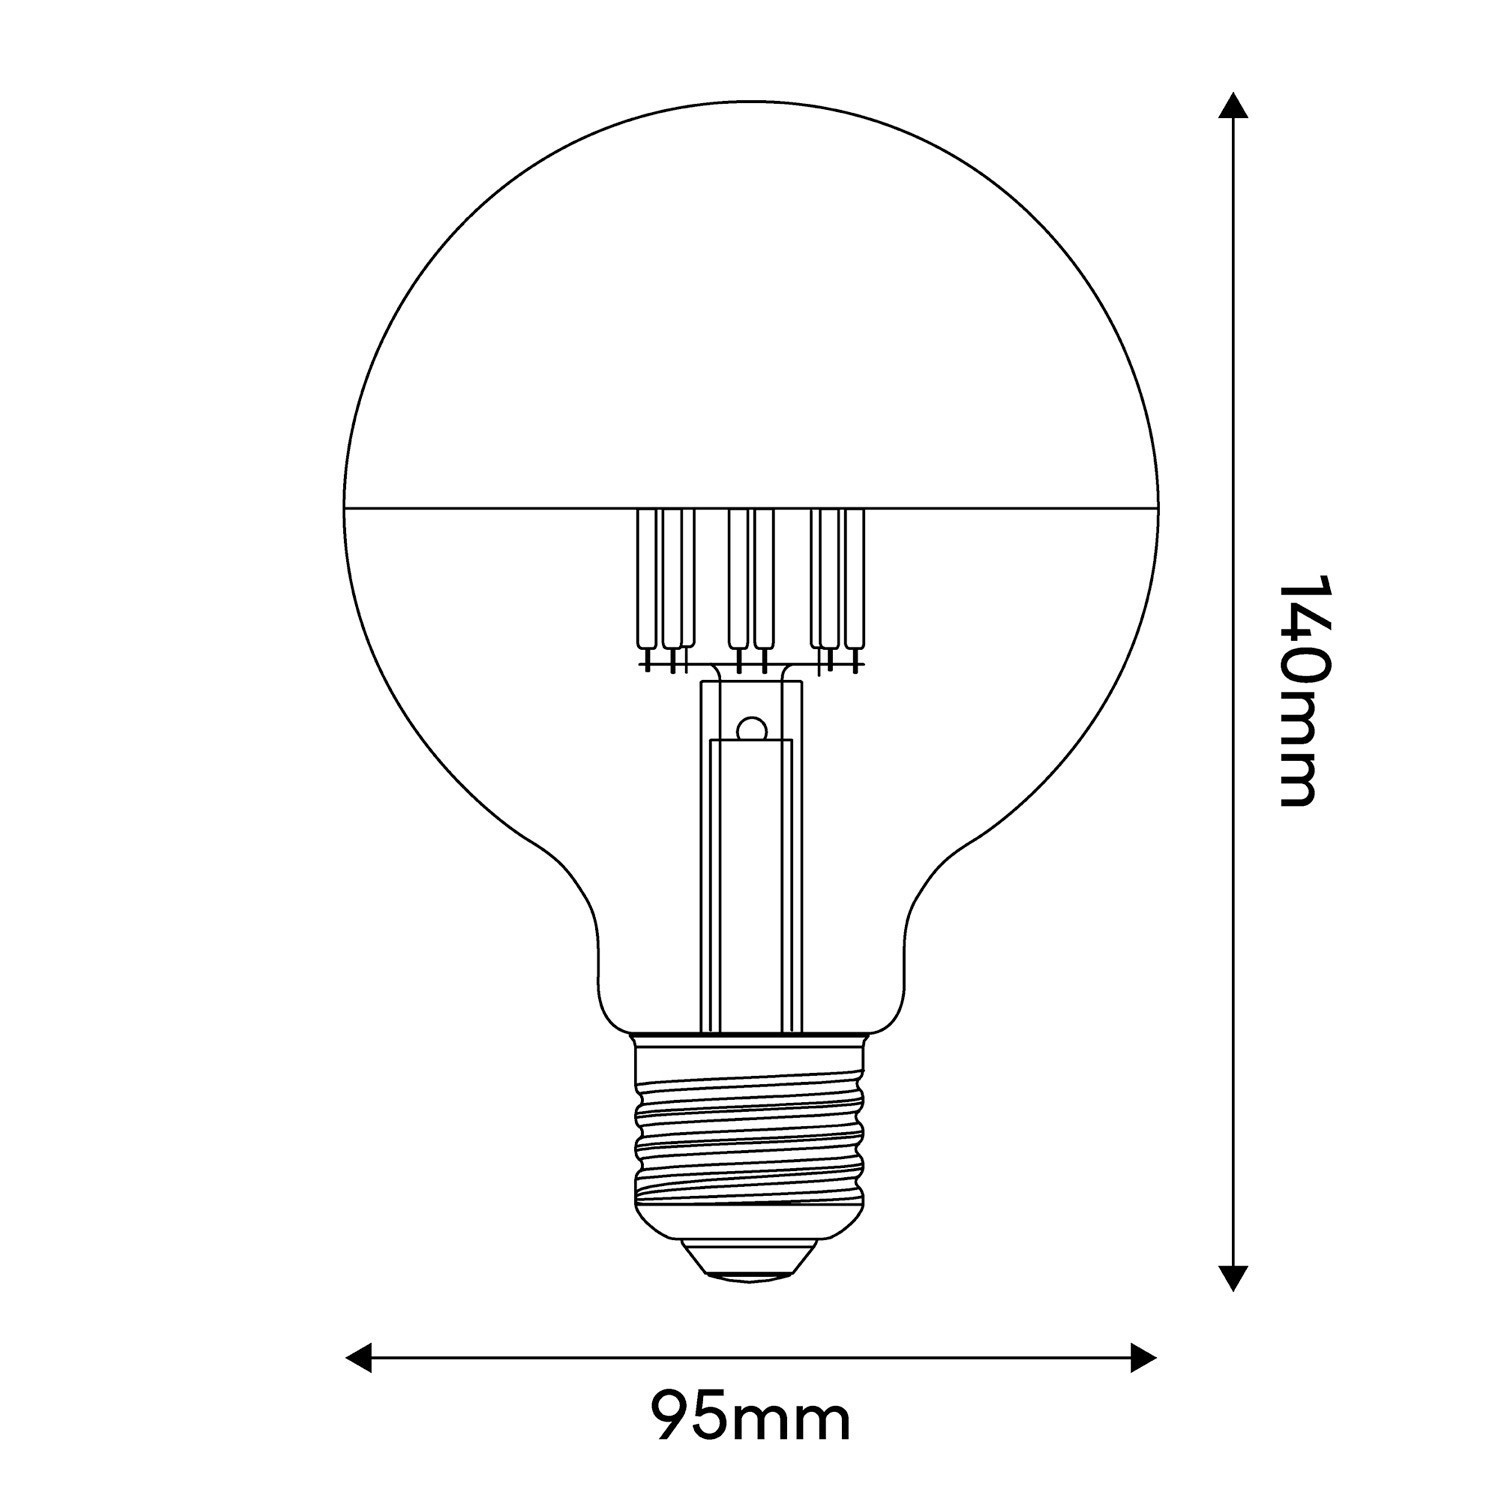 LED Copper Half Sphere Globe Light Bulb G95 7W 650Lm E27 2700K Dimmable - A24